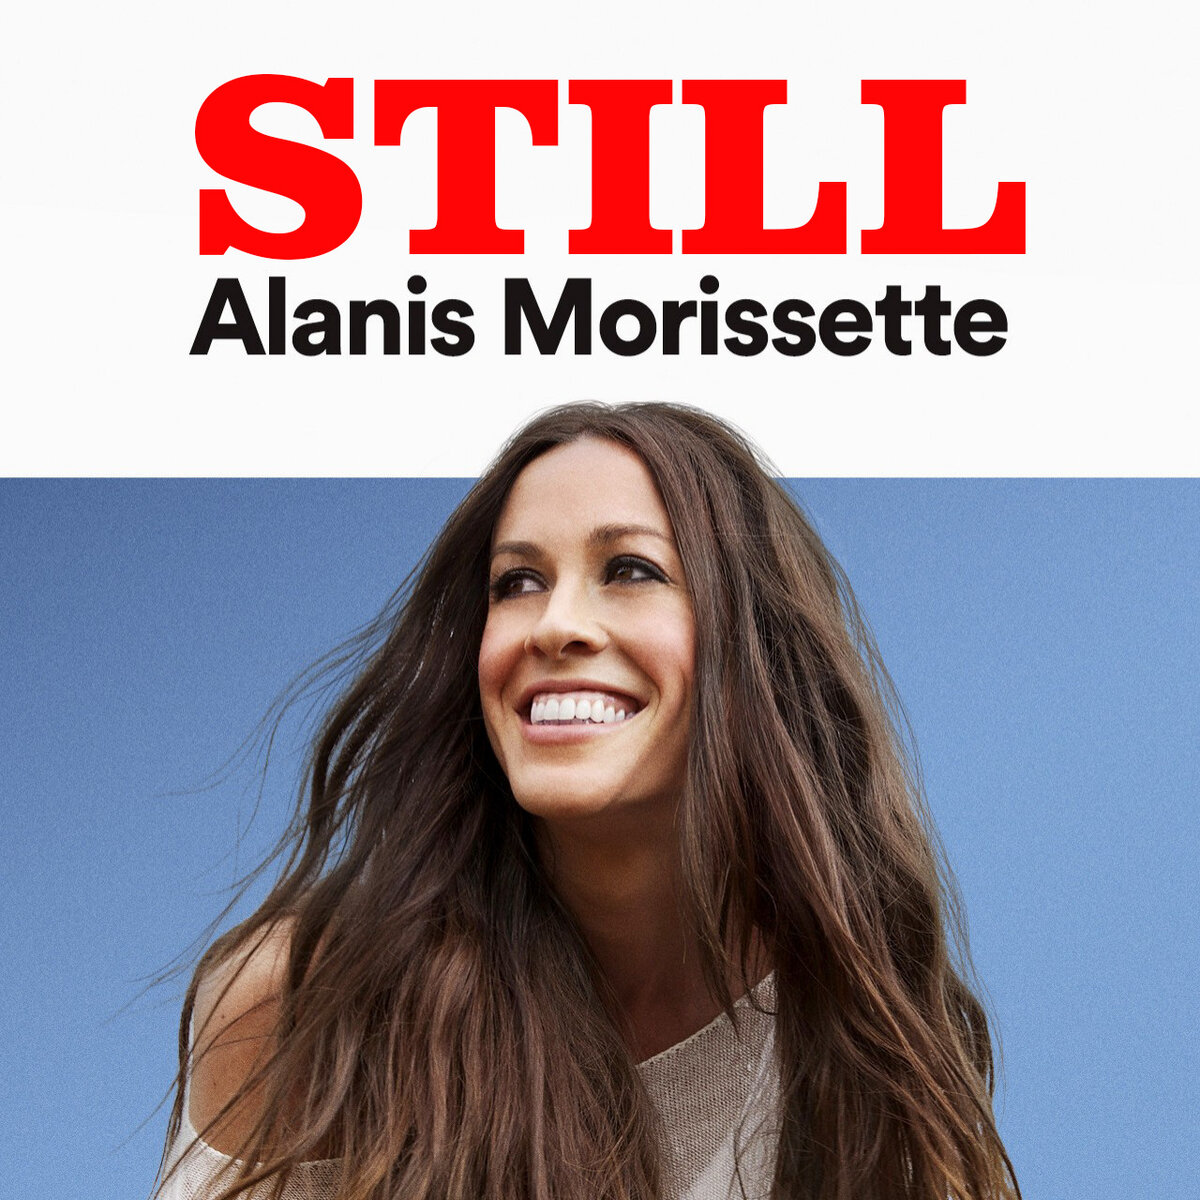 How to pronounce alanis morissette